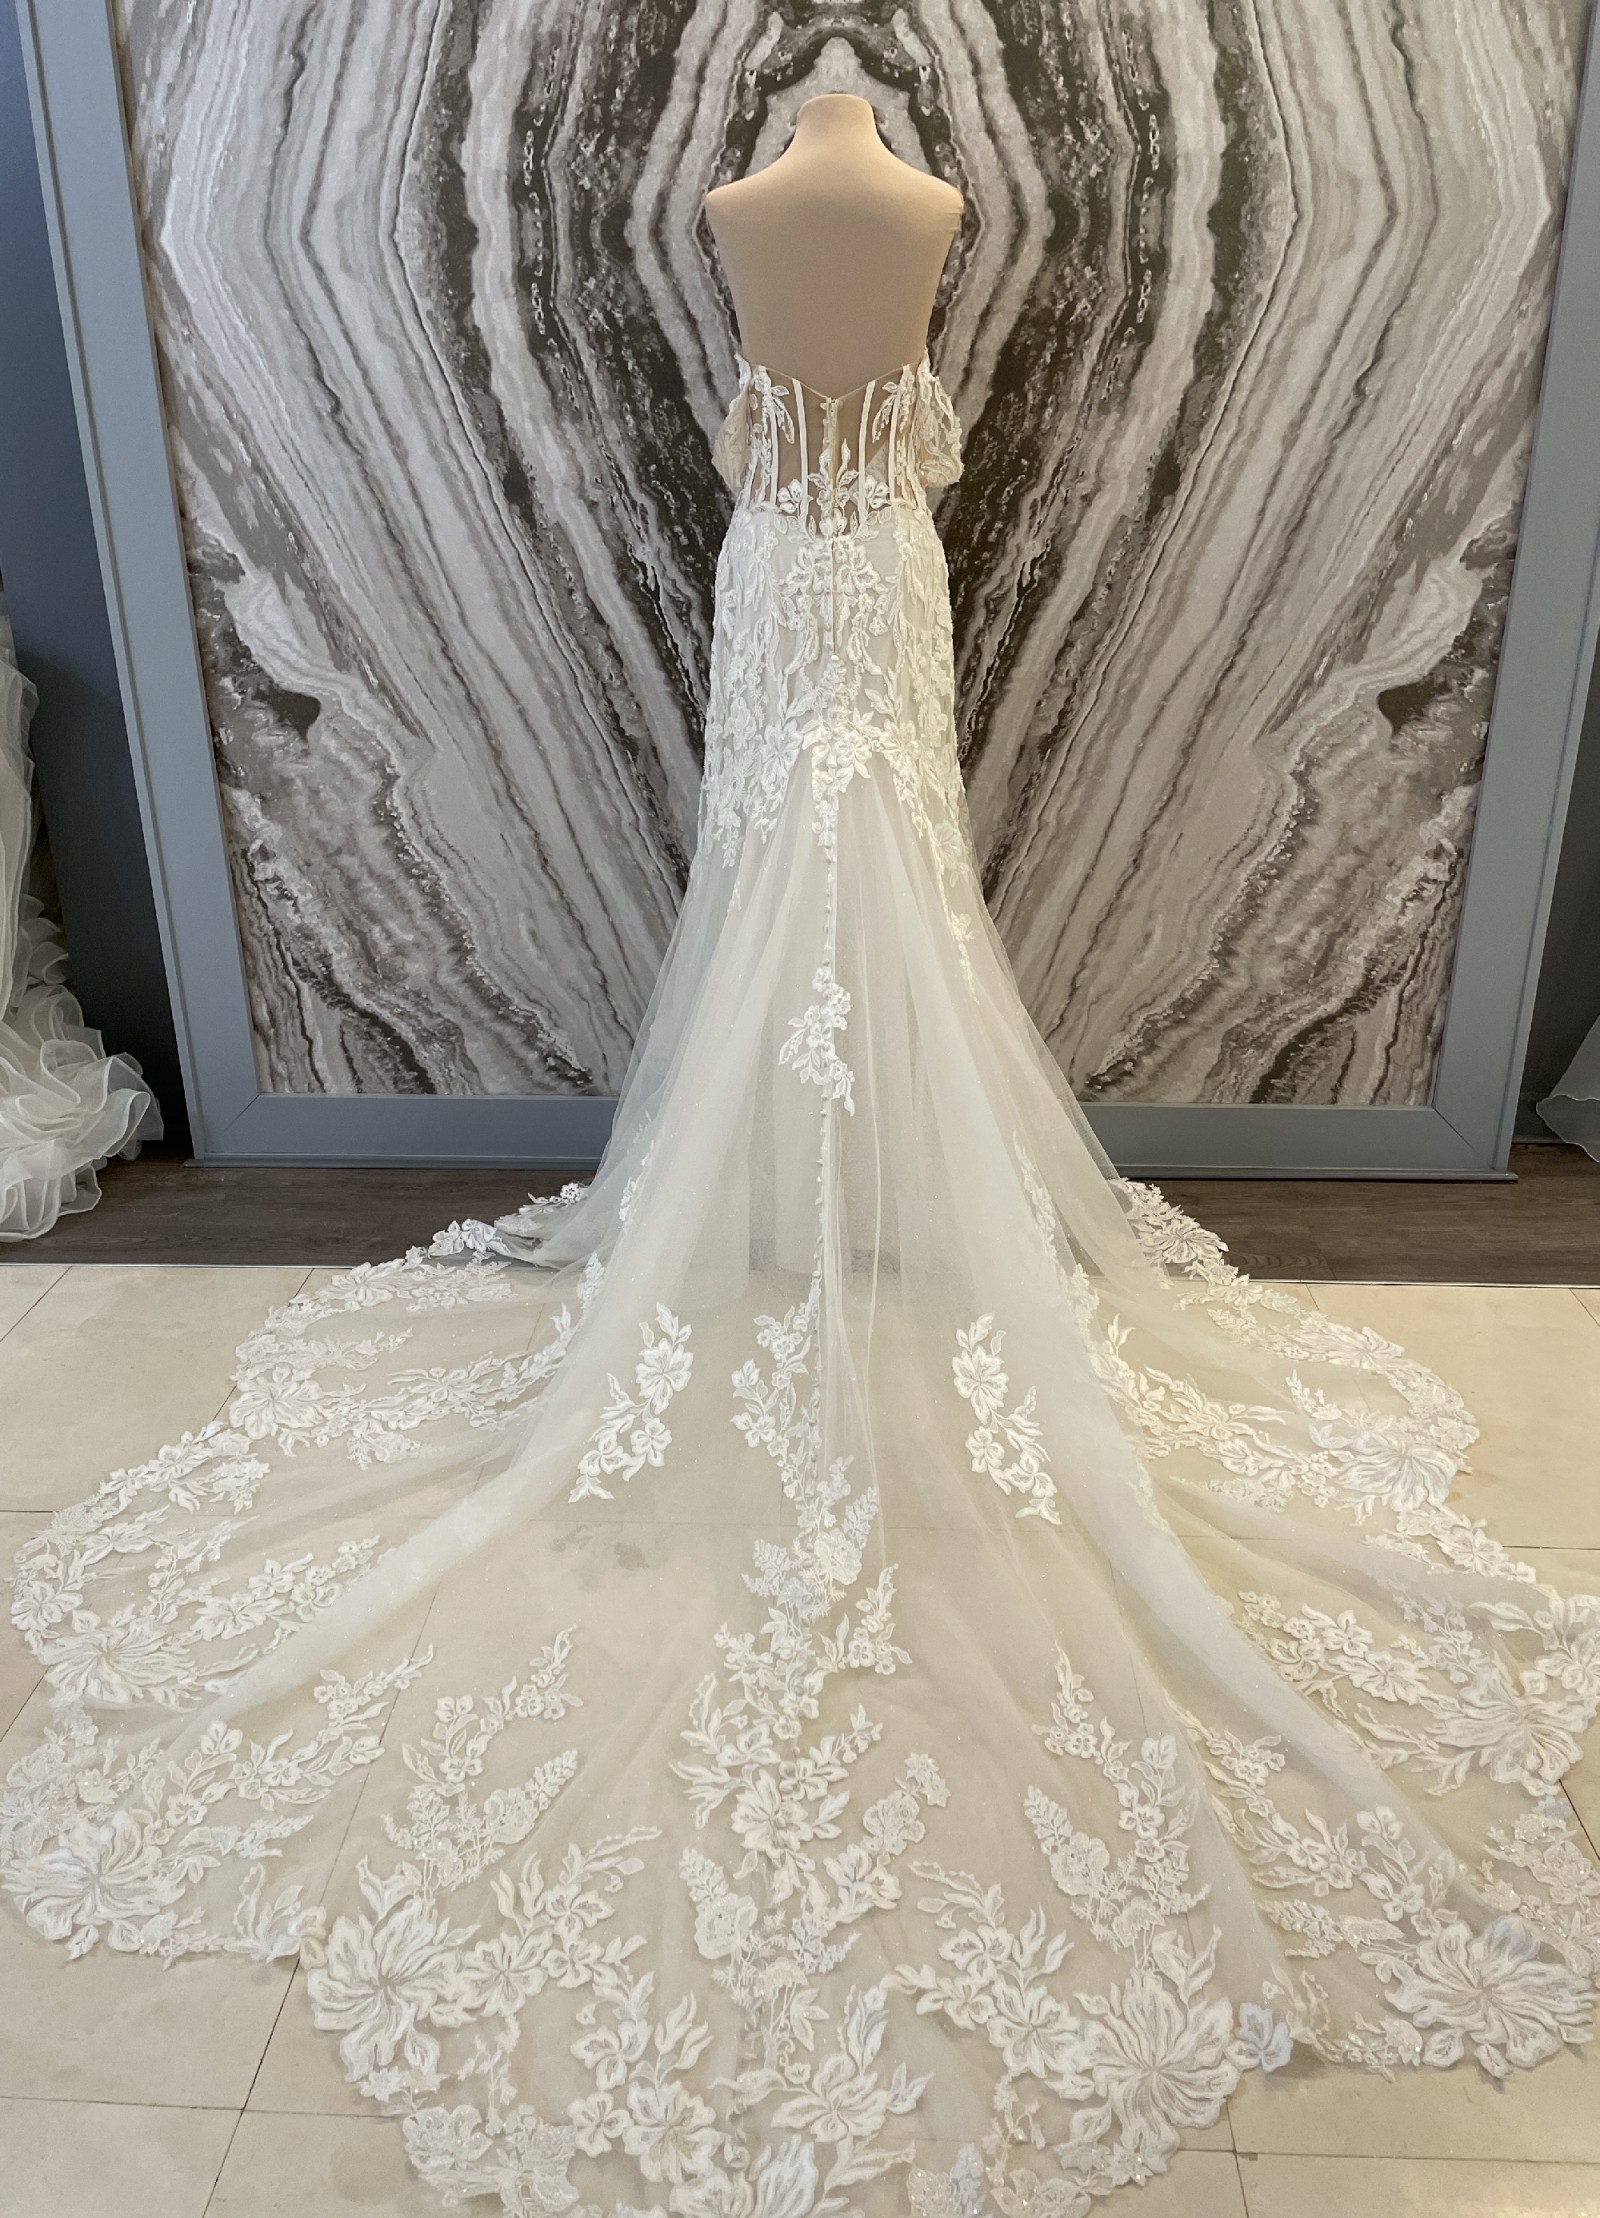 Allure Couture C623 Sample Wedding Dress Save 58% - Stillwhite